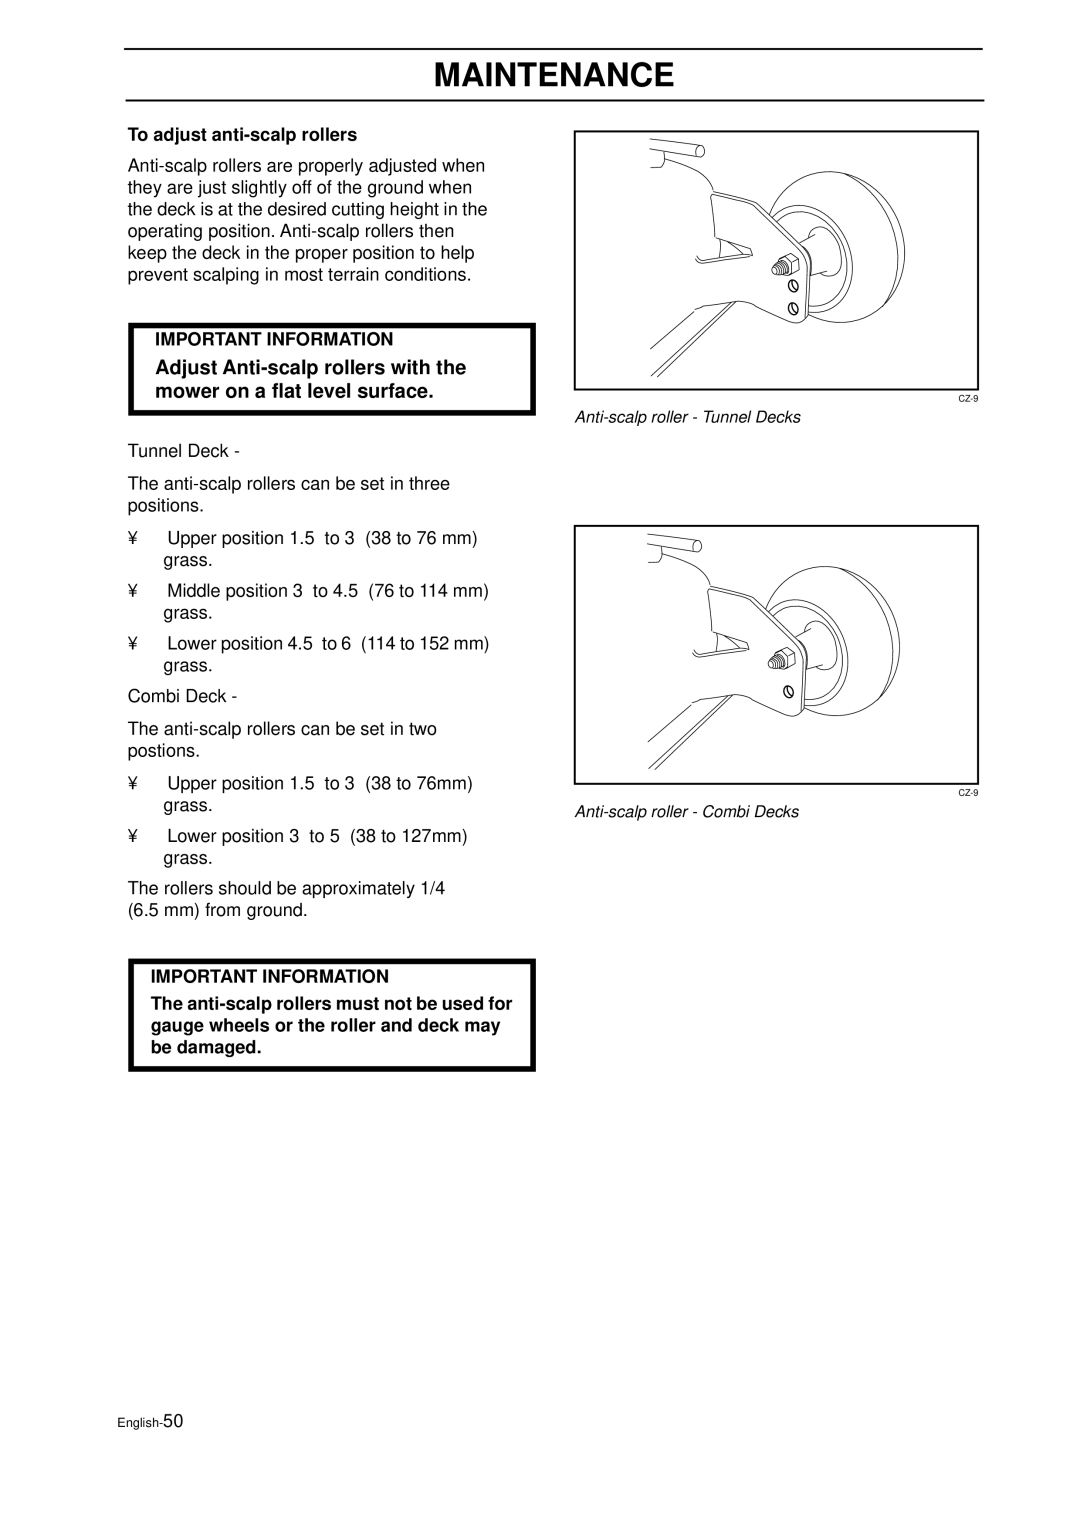 Husqvarna IZ 21 manual To adjust anti-scalprollers, Maintenance, Important Information 